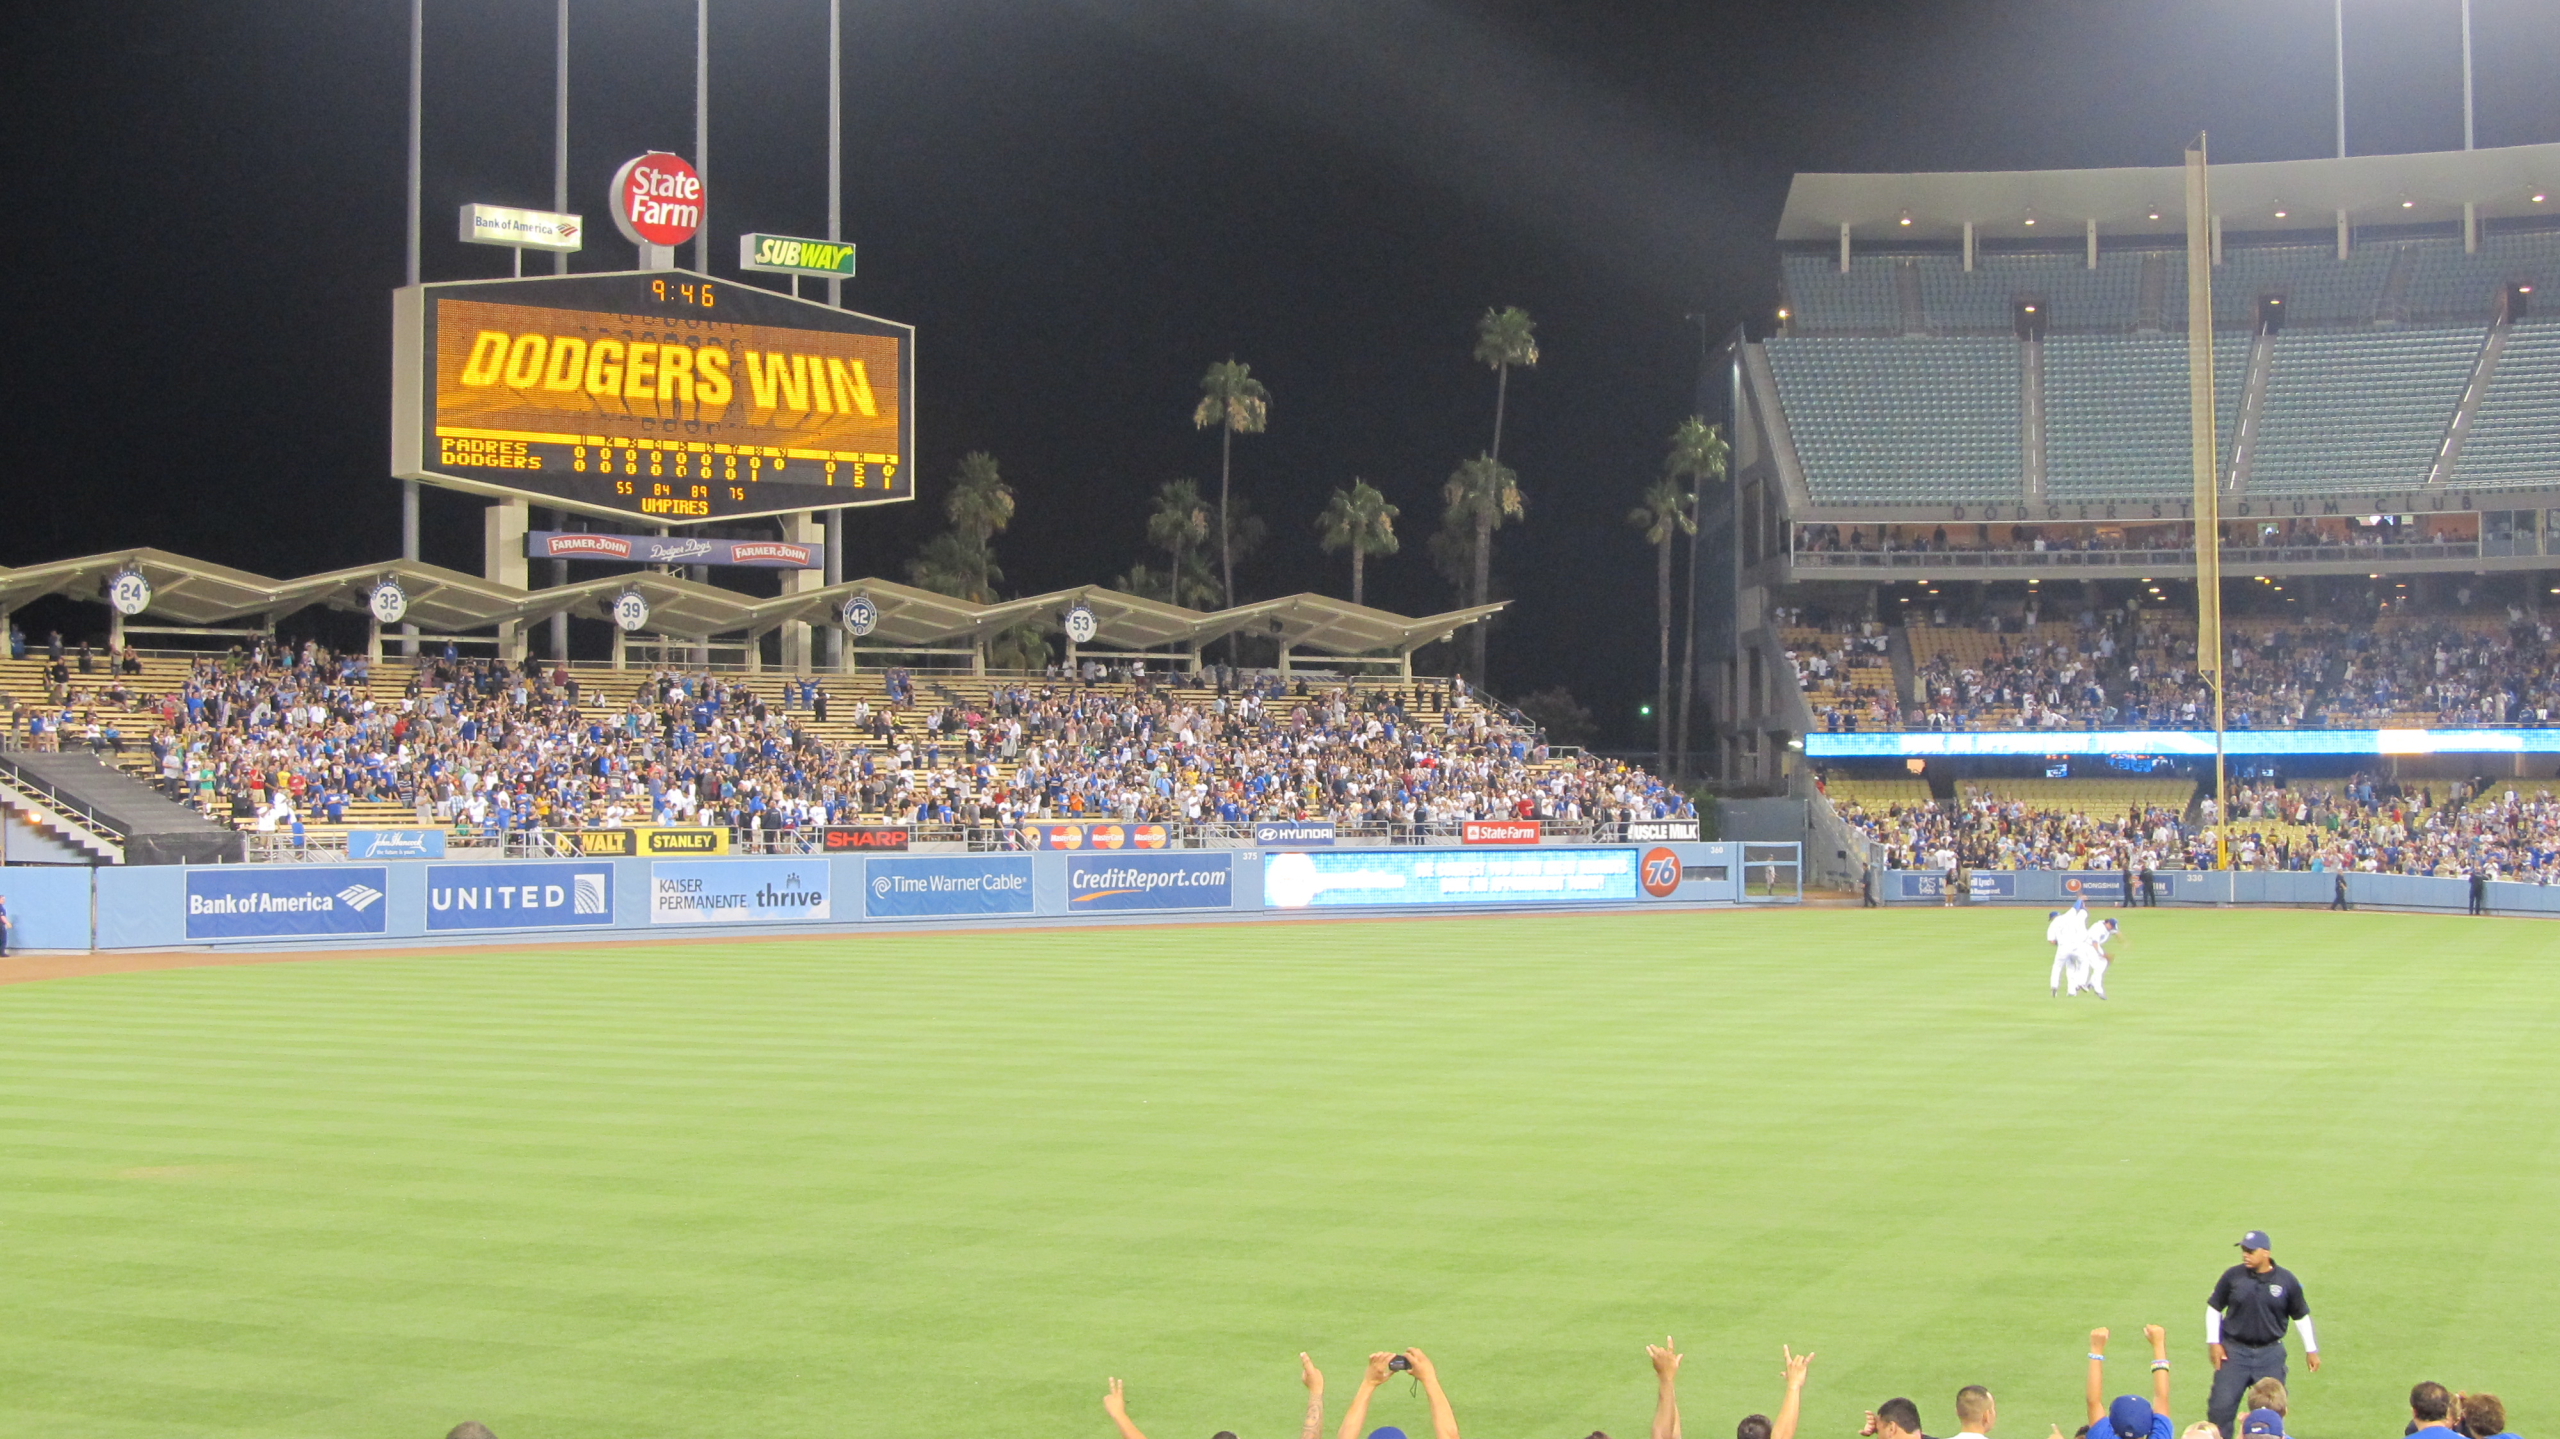 Scoreboard at Dodger Stadium shows the Dodgers' 1-0 win on July 8, 2011, at SABR 41 (Photo: Jacob Pomrenke)